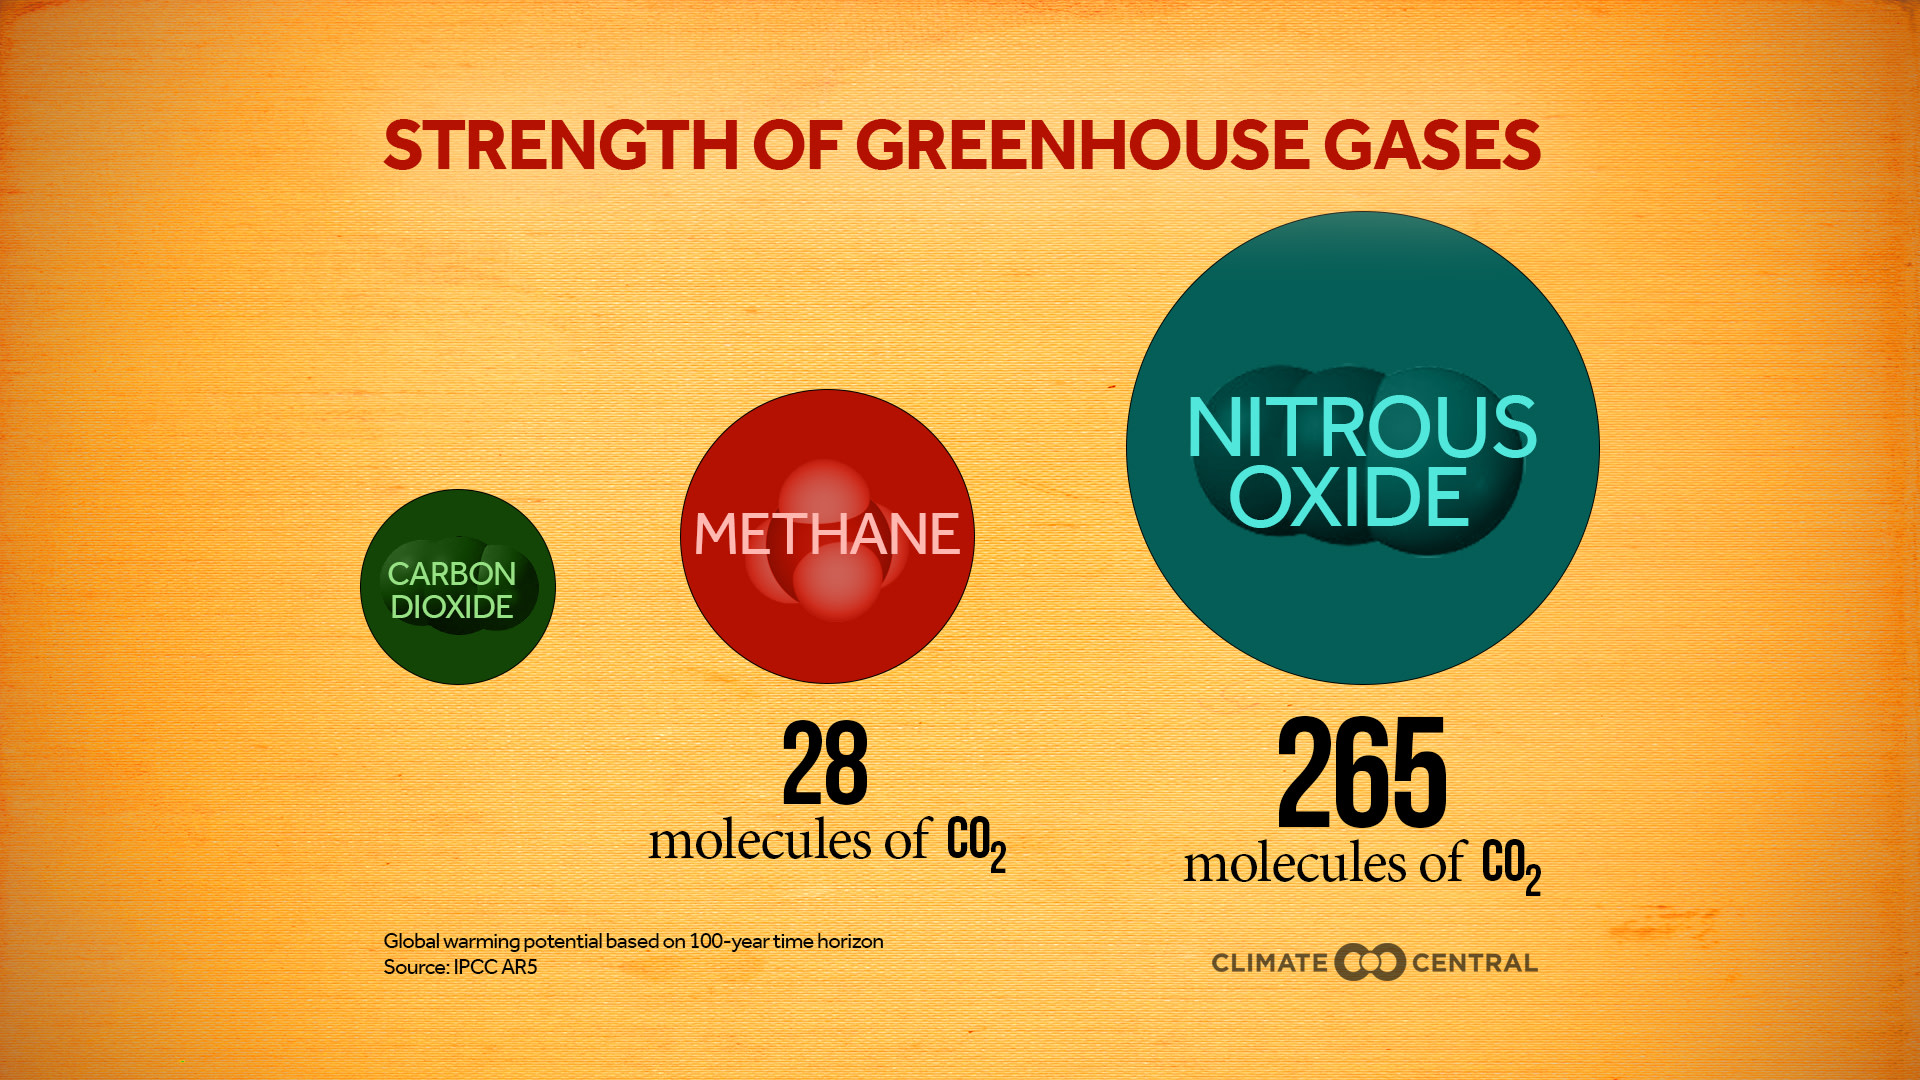 Set 3 - WMO Greenhouse Gas Bulletin